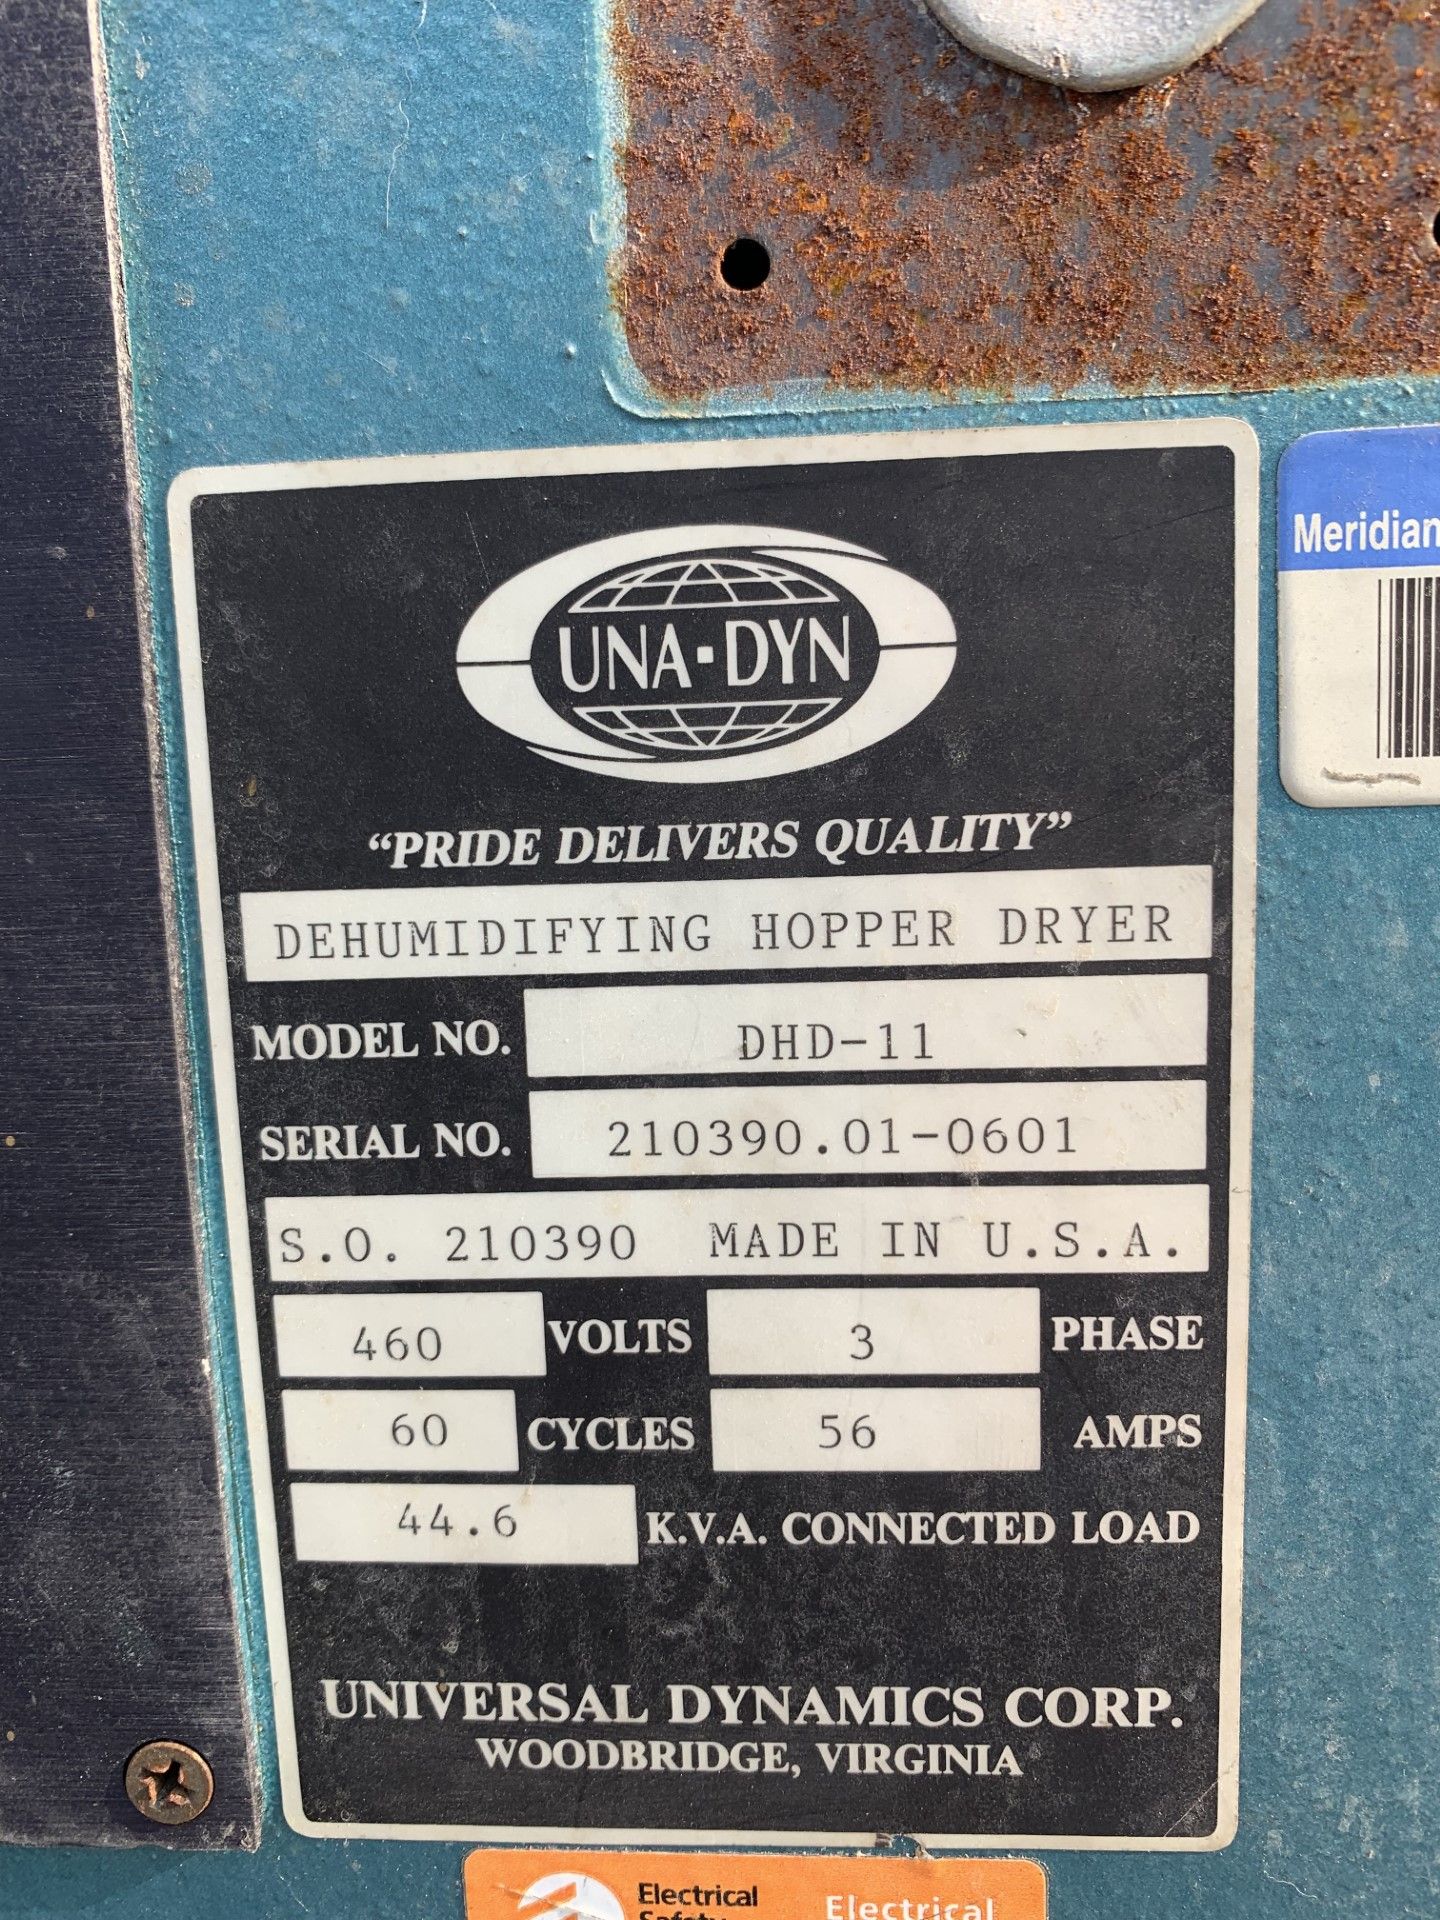 Universal dynamics corp. dehumidifier hopper dryer - Image 4 of 6